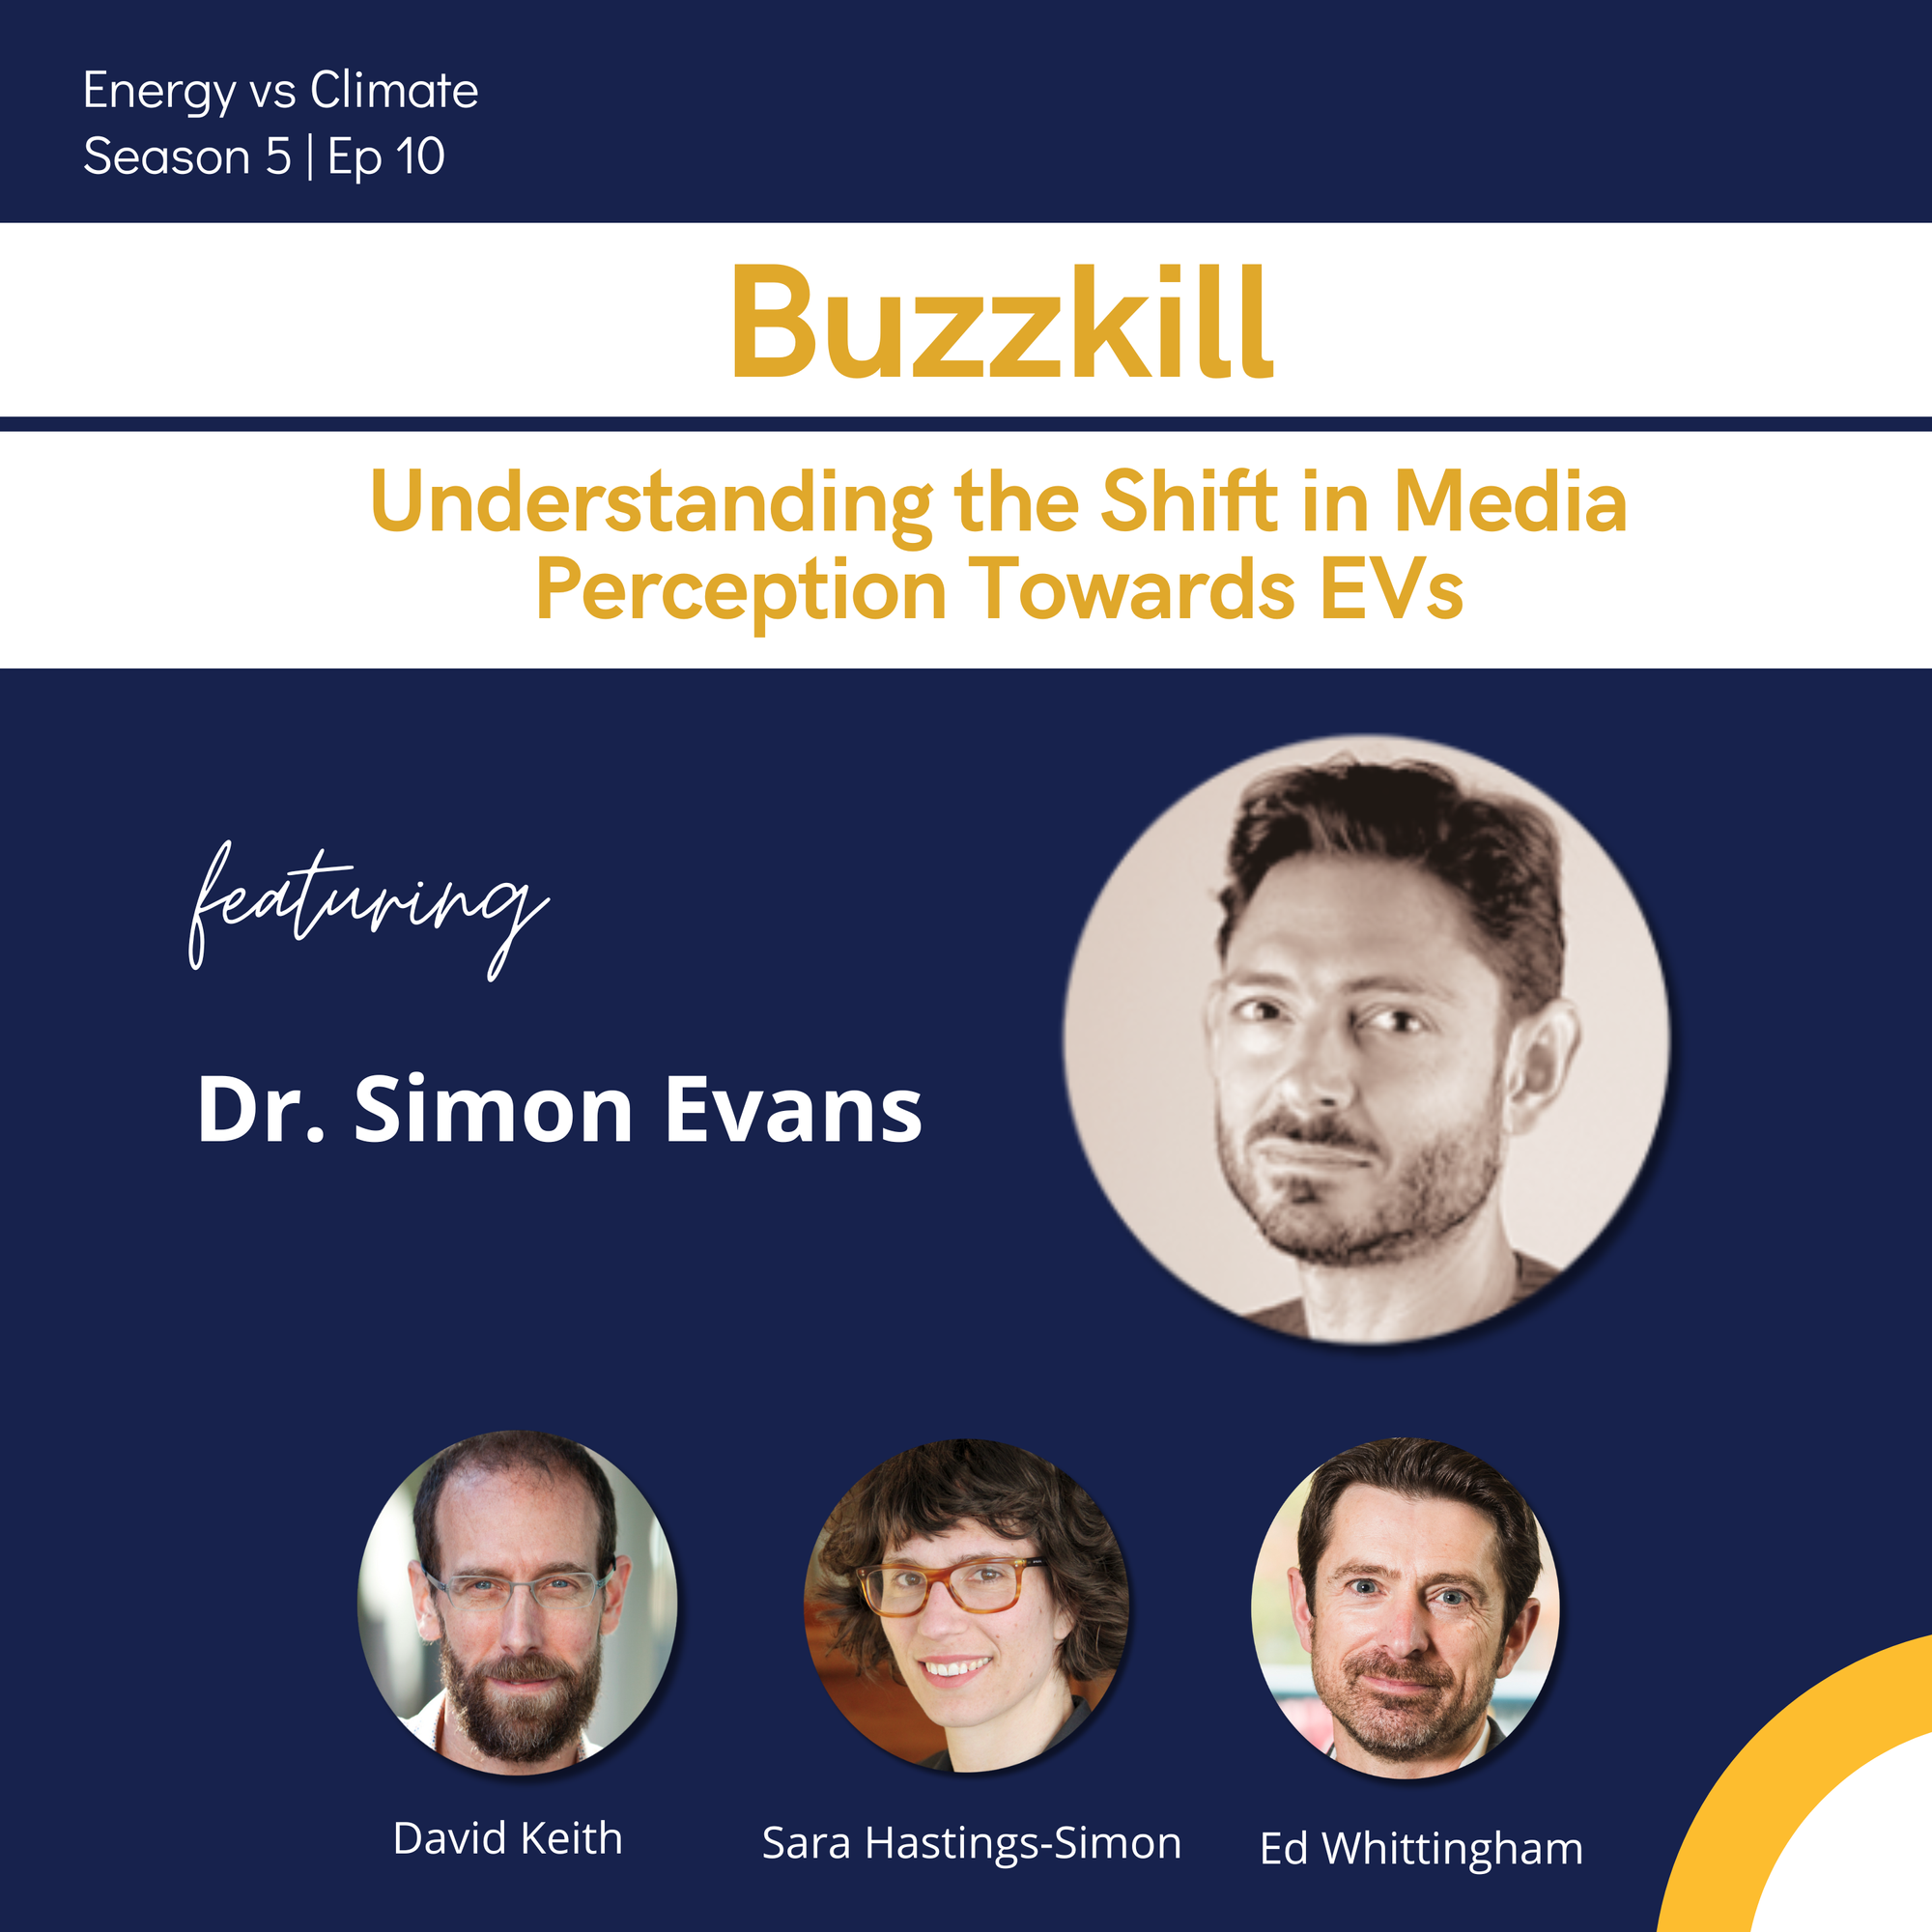 Buzzkill - Understanding the Shift in Media Perception Towards EVs